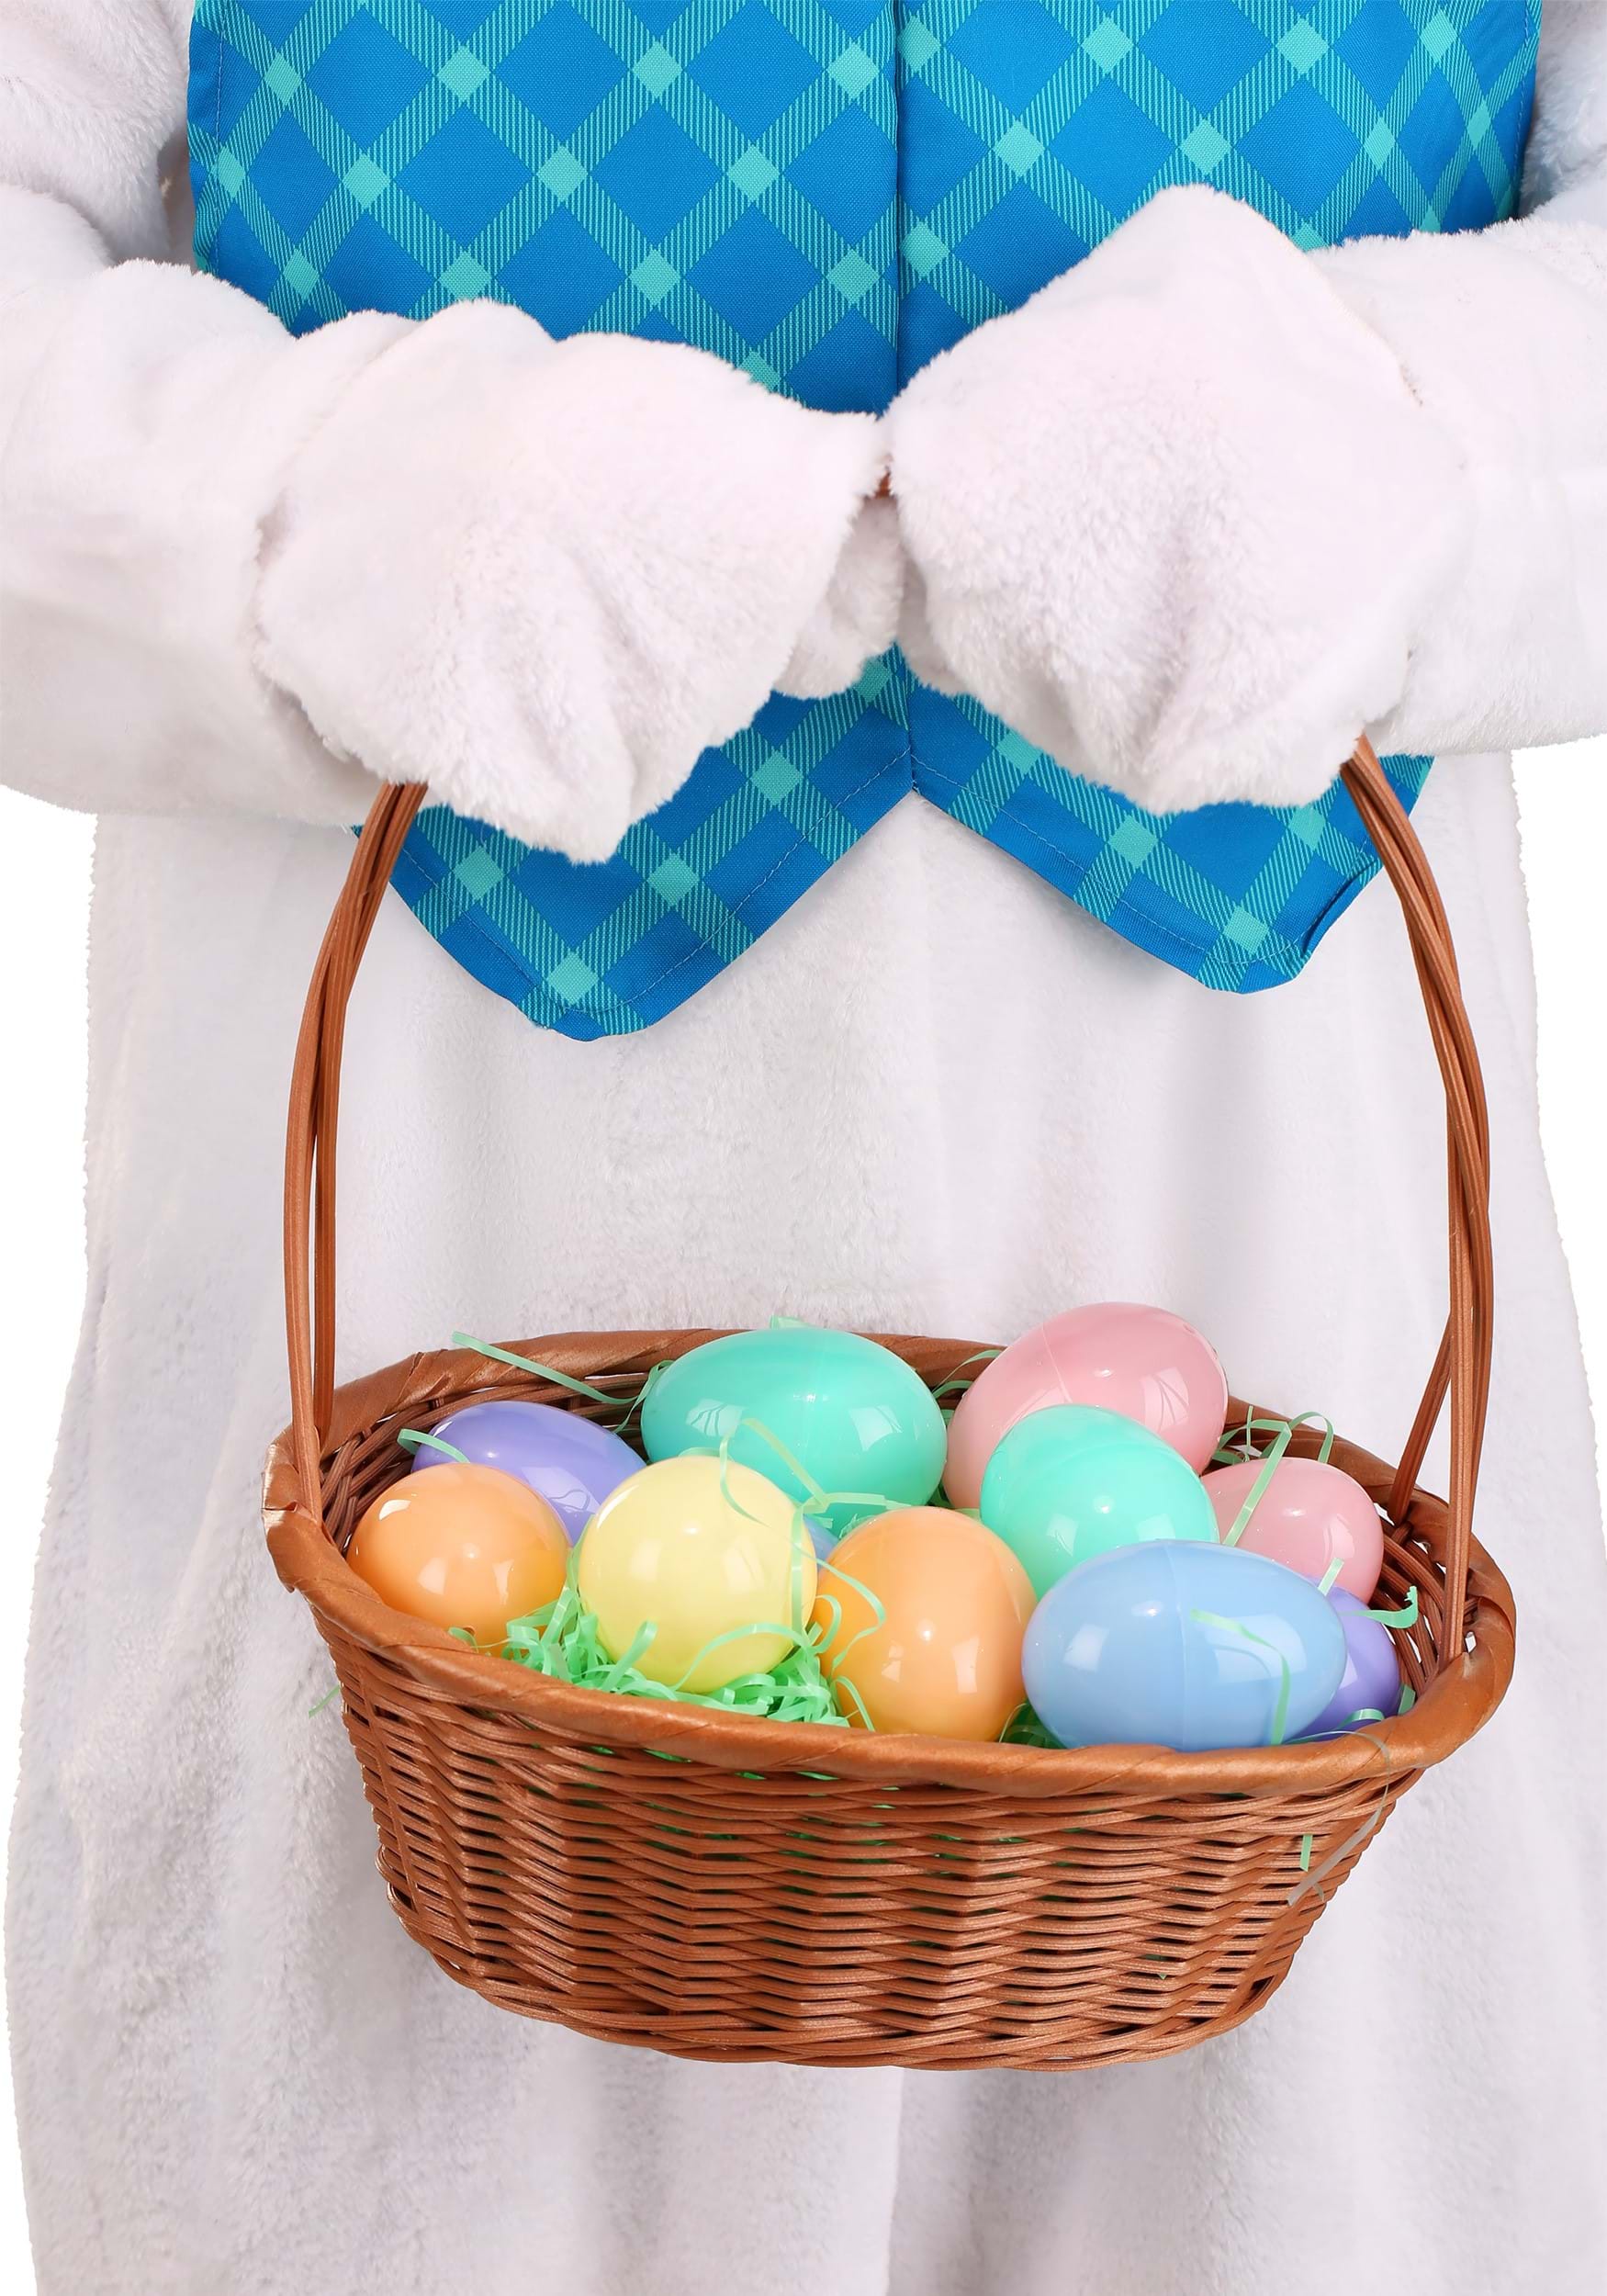 Adult Mascot Happy Easter Bunny Costume